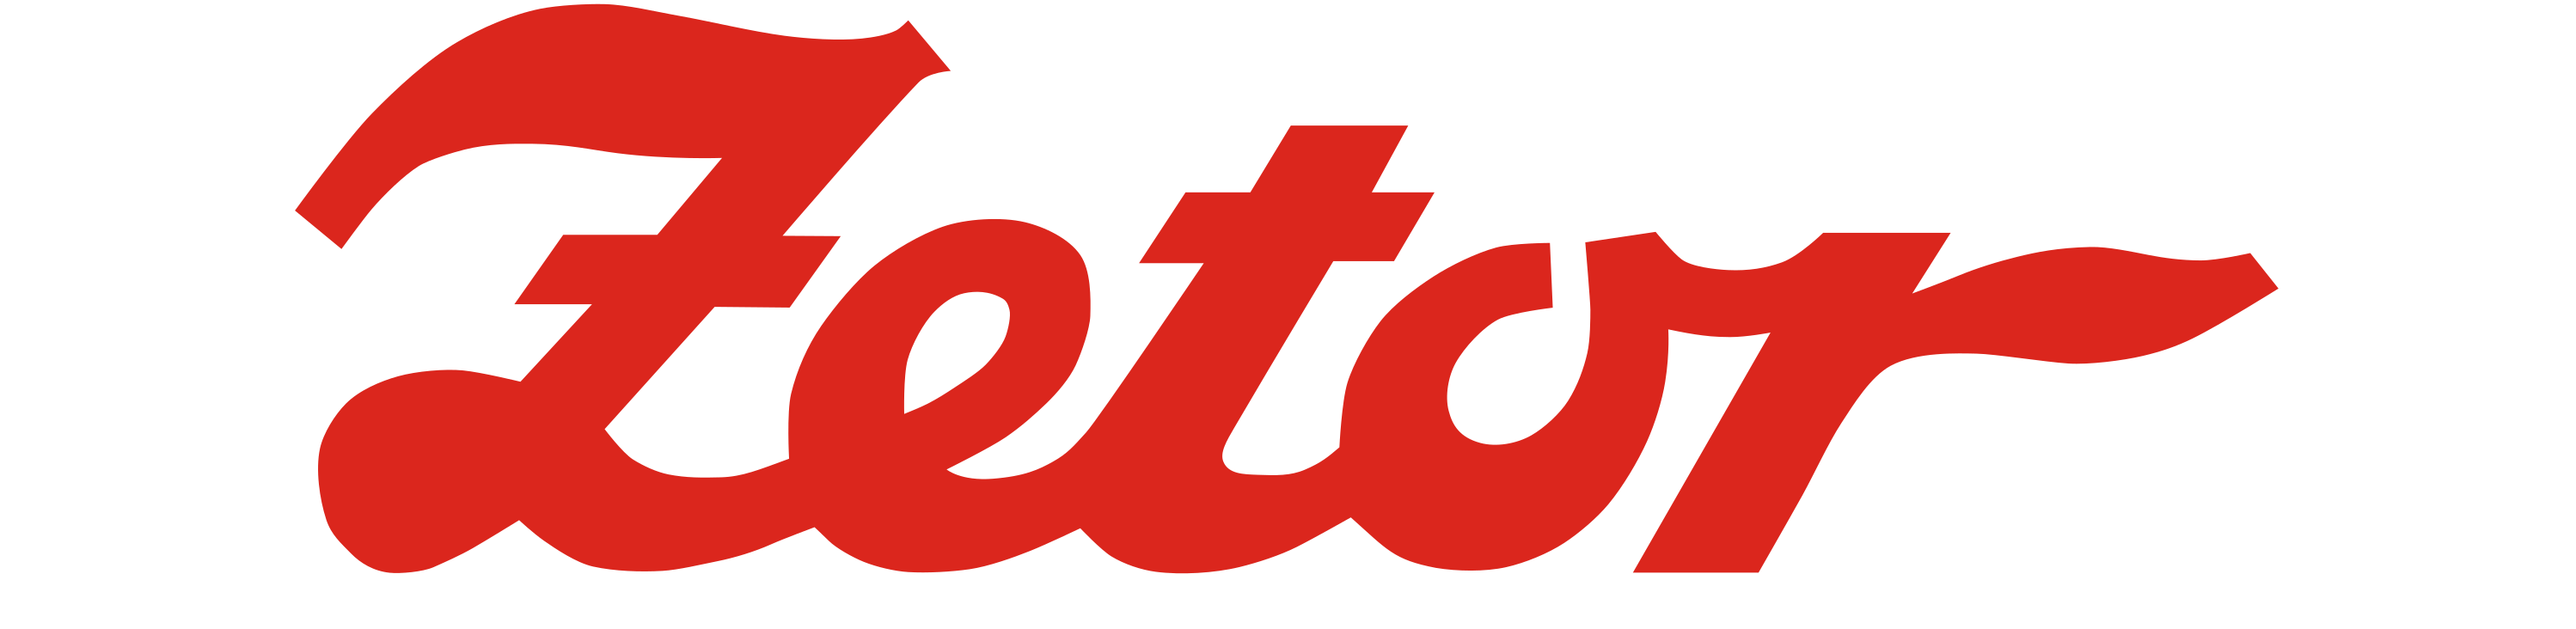 Logo - Zetor